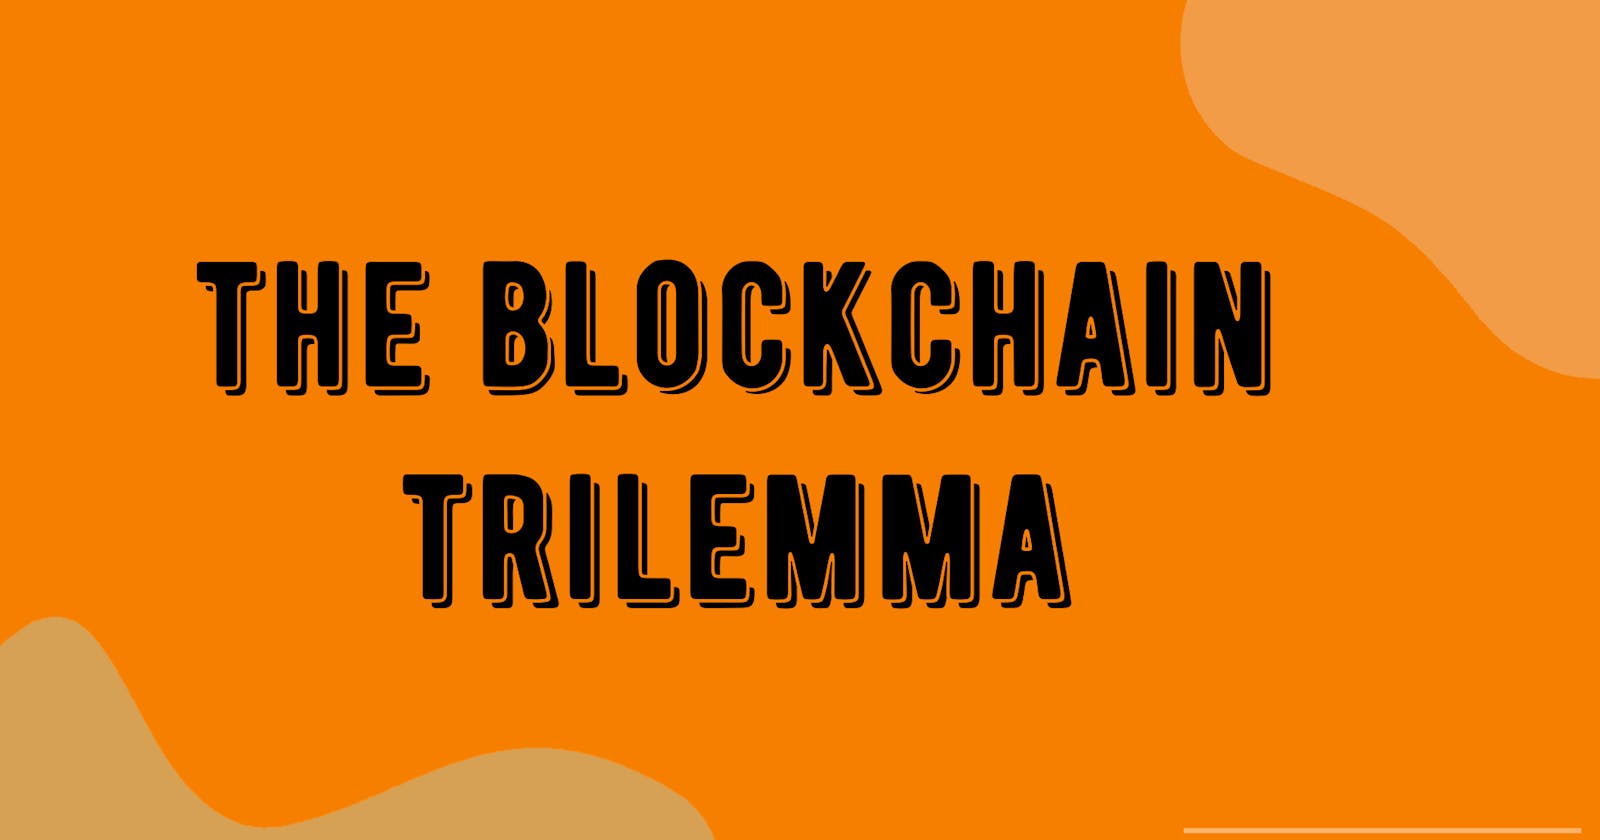 The Blockchain Trilemma